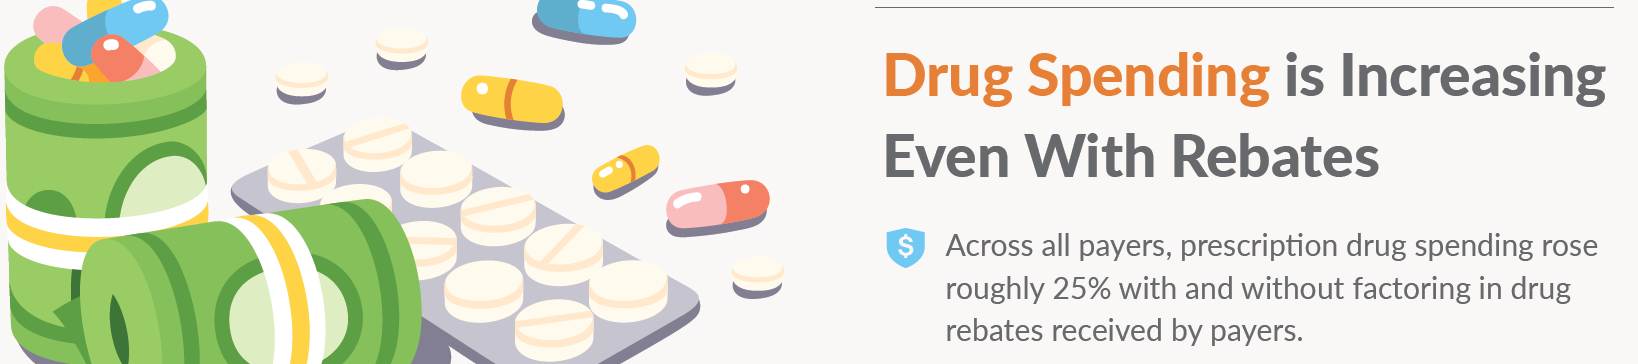 drug-rebates-for-high-cost-prescription-drugs-continue-to-rise-civhc